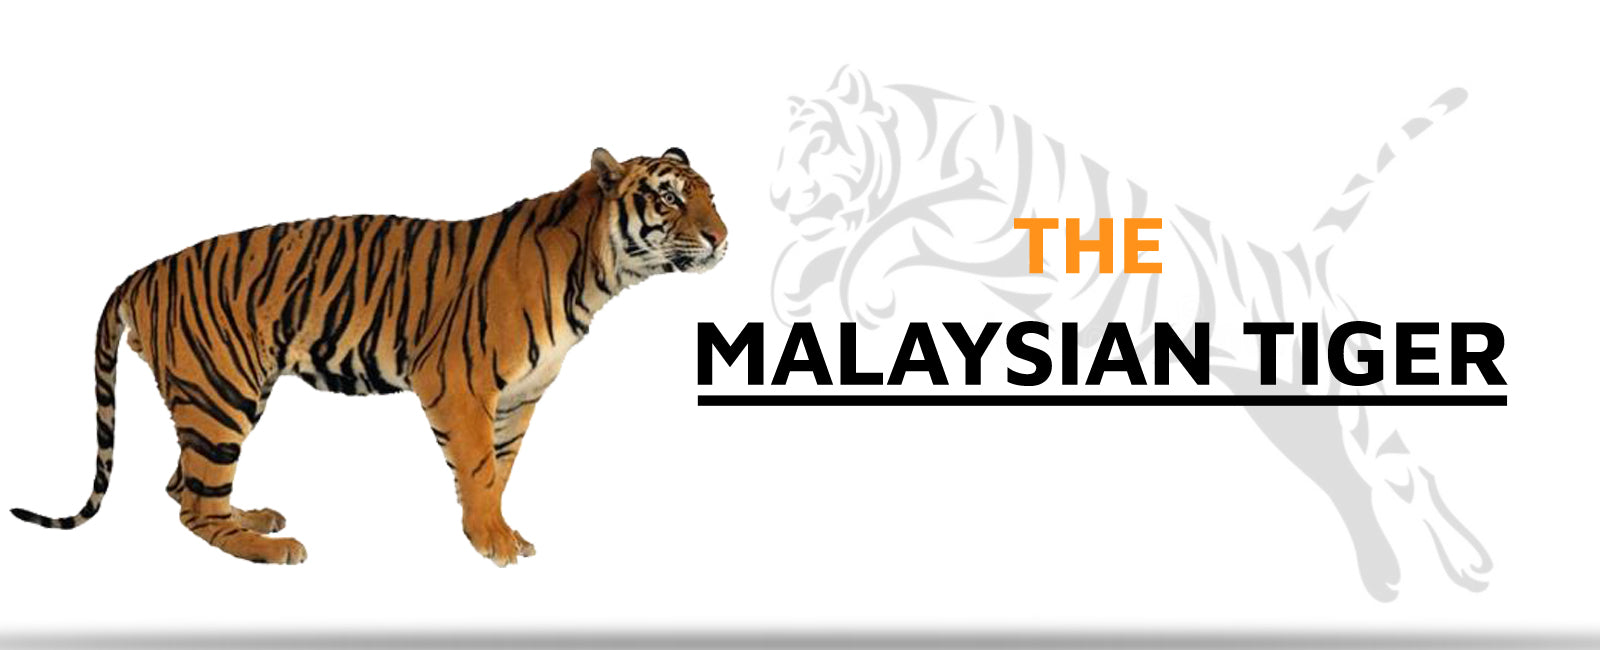 The Malaysian Tiger